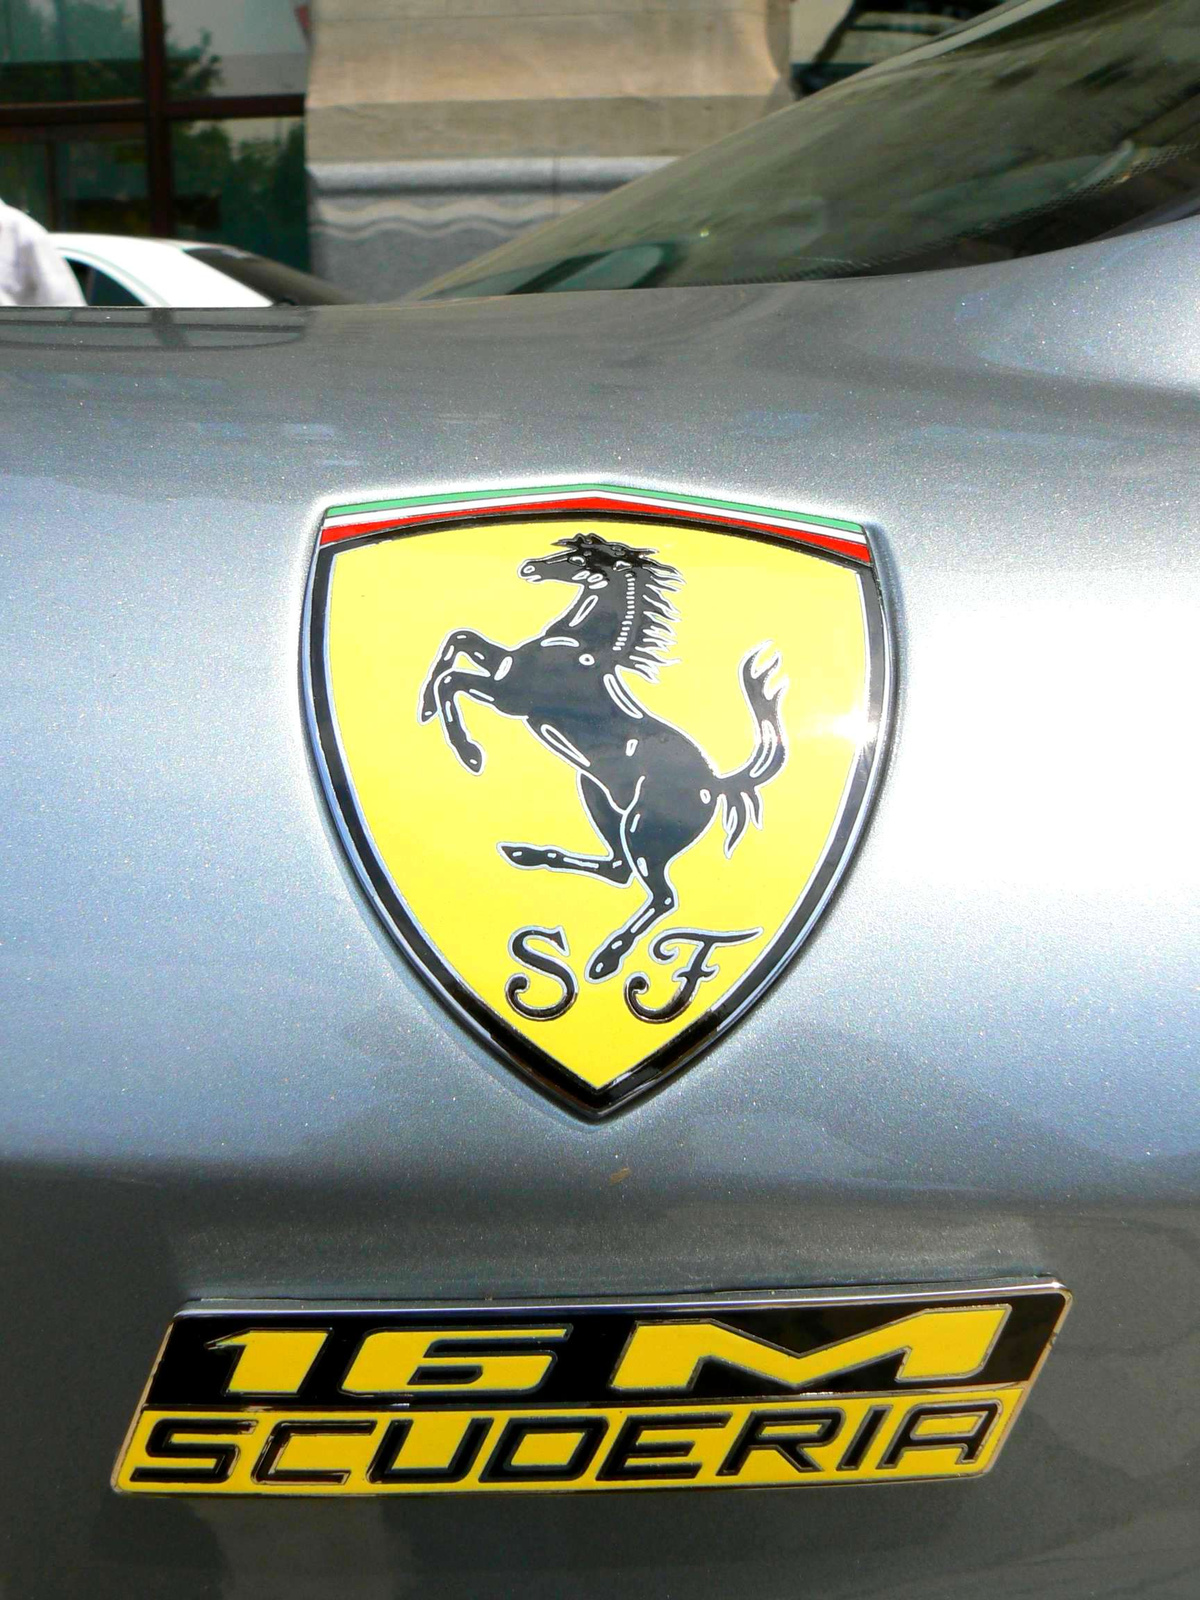 Ferrari F430 Scuderia Spider 16M 014